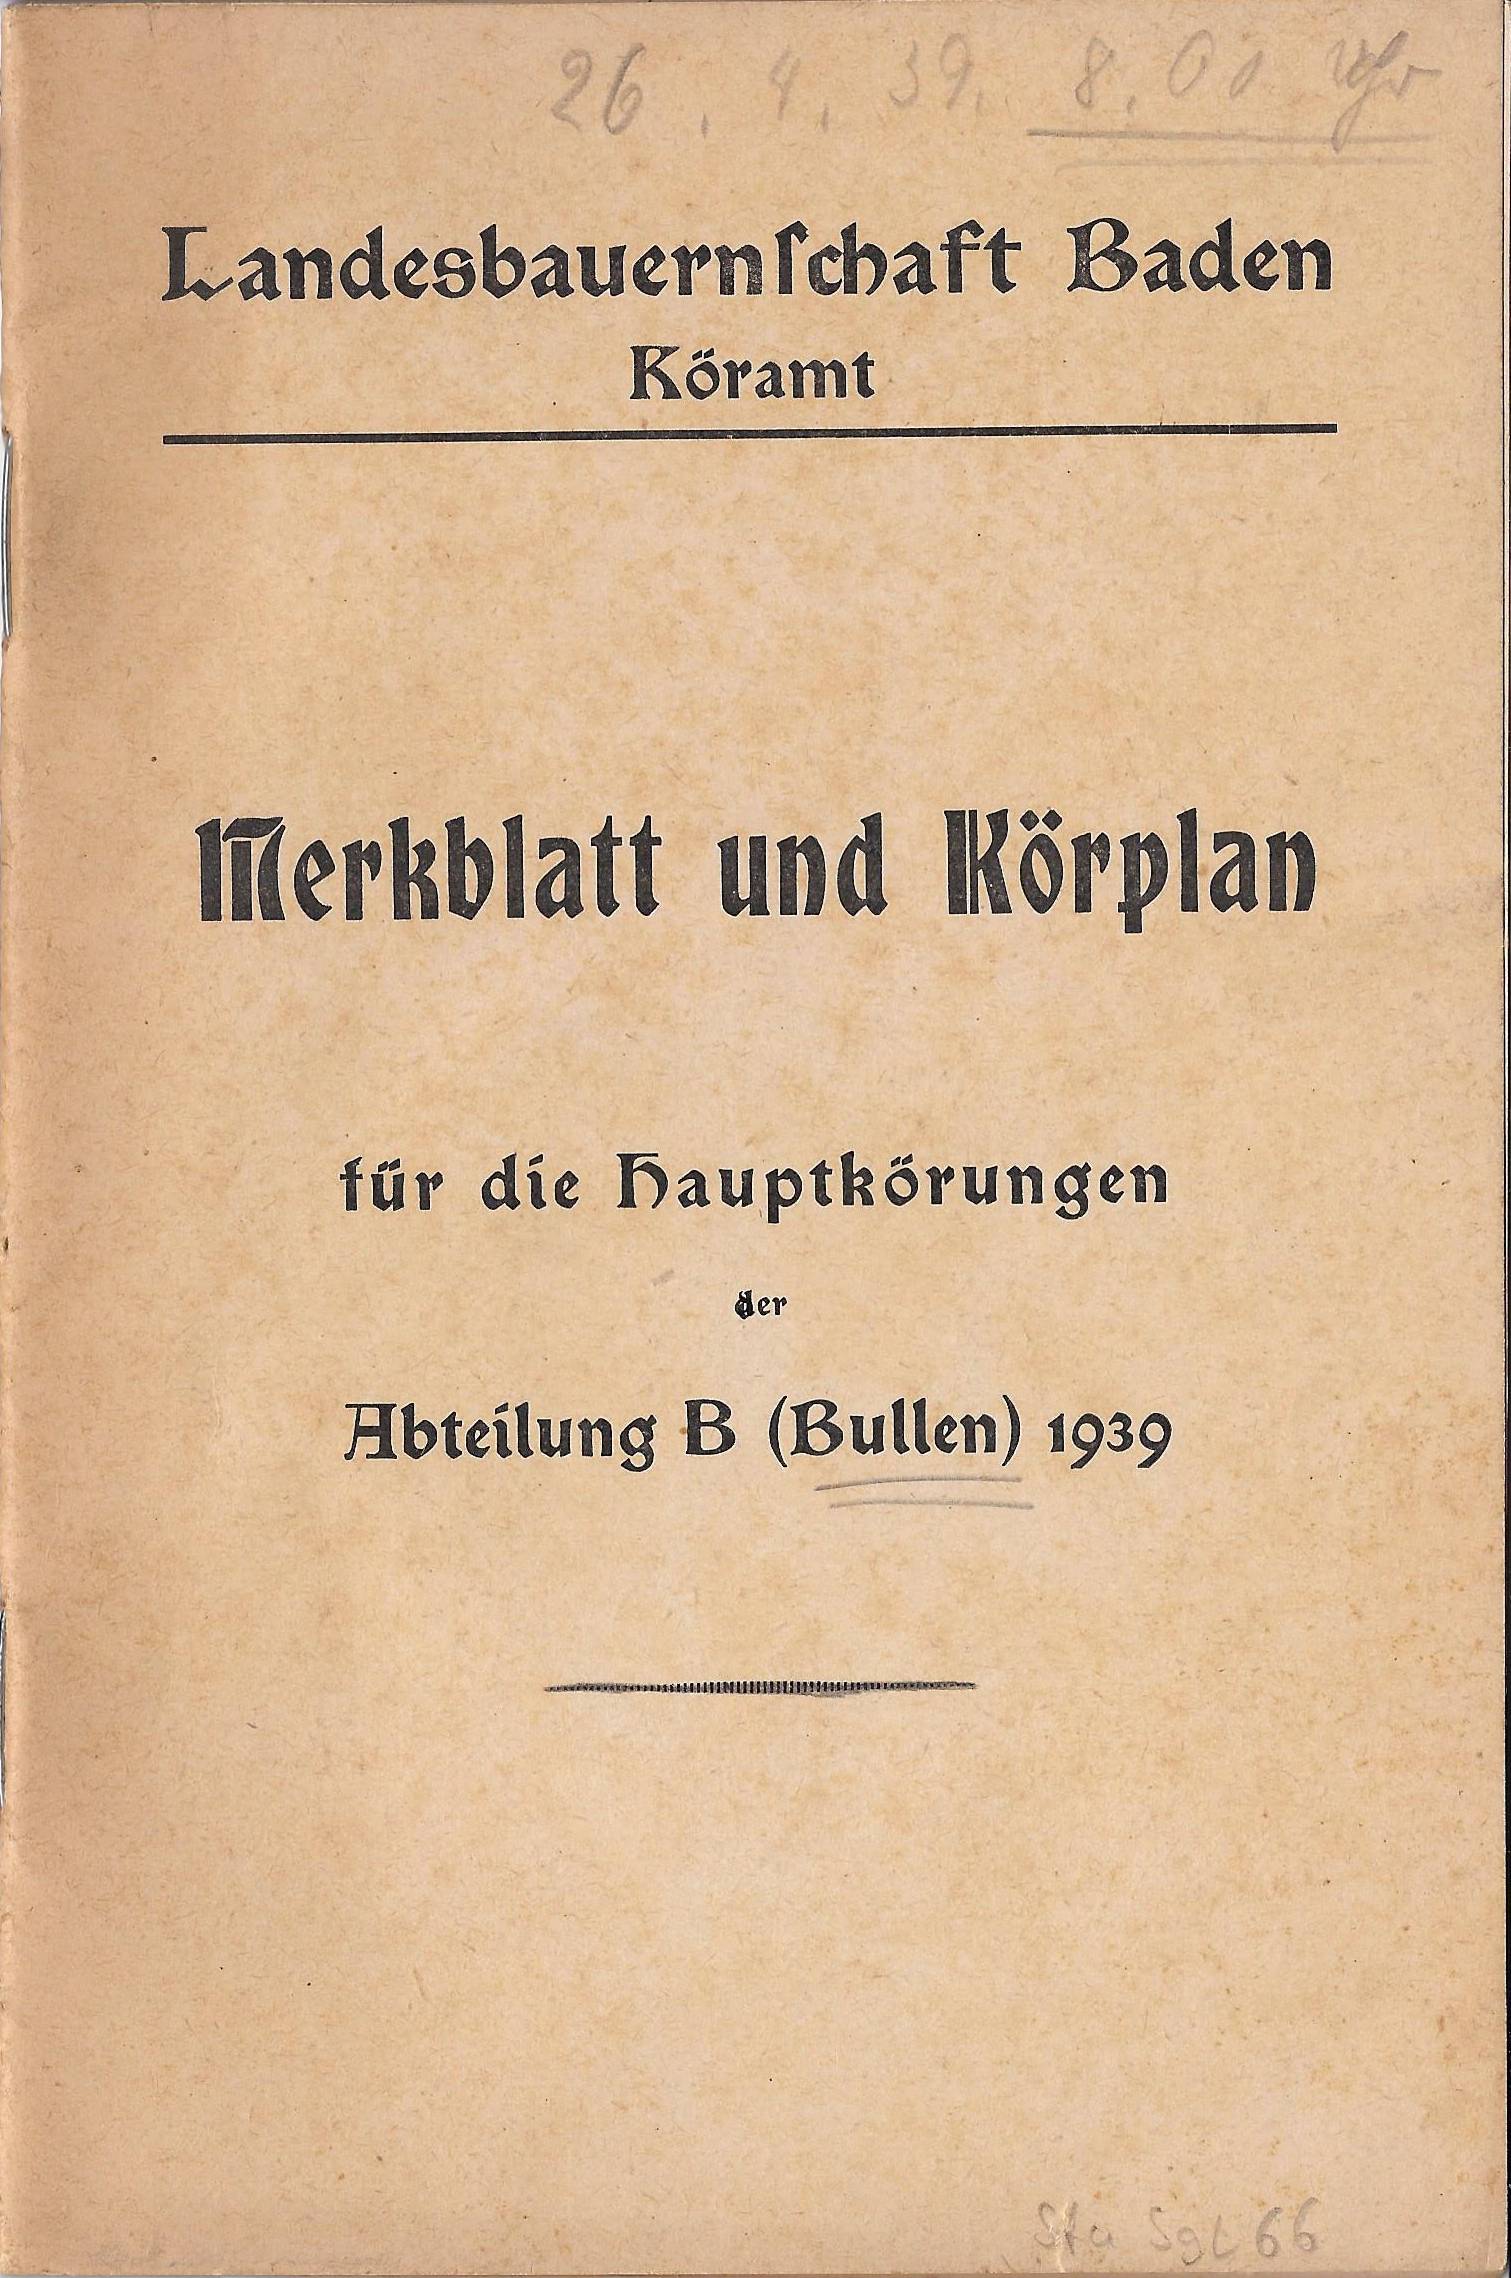  Merkblatt und Körplan für Baden 1939 